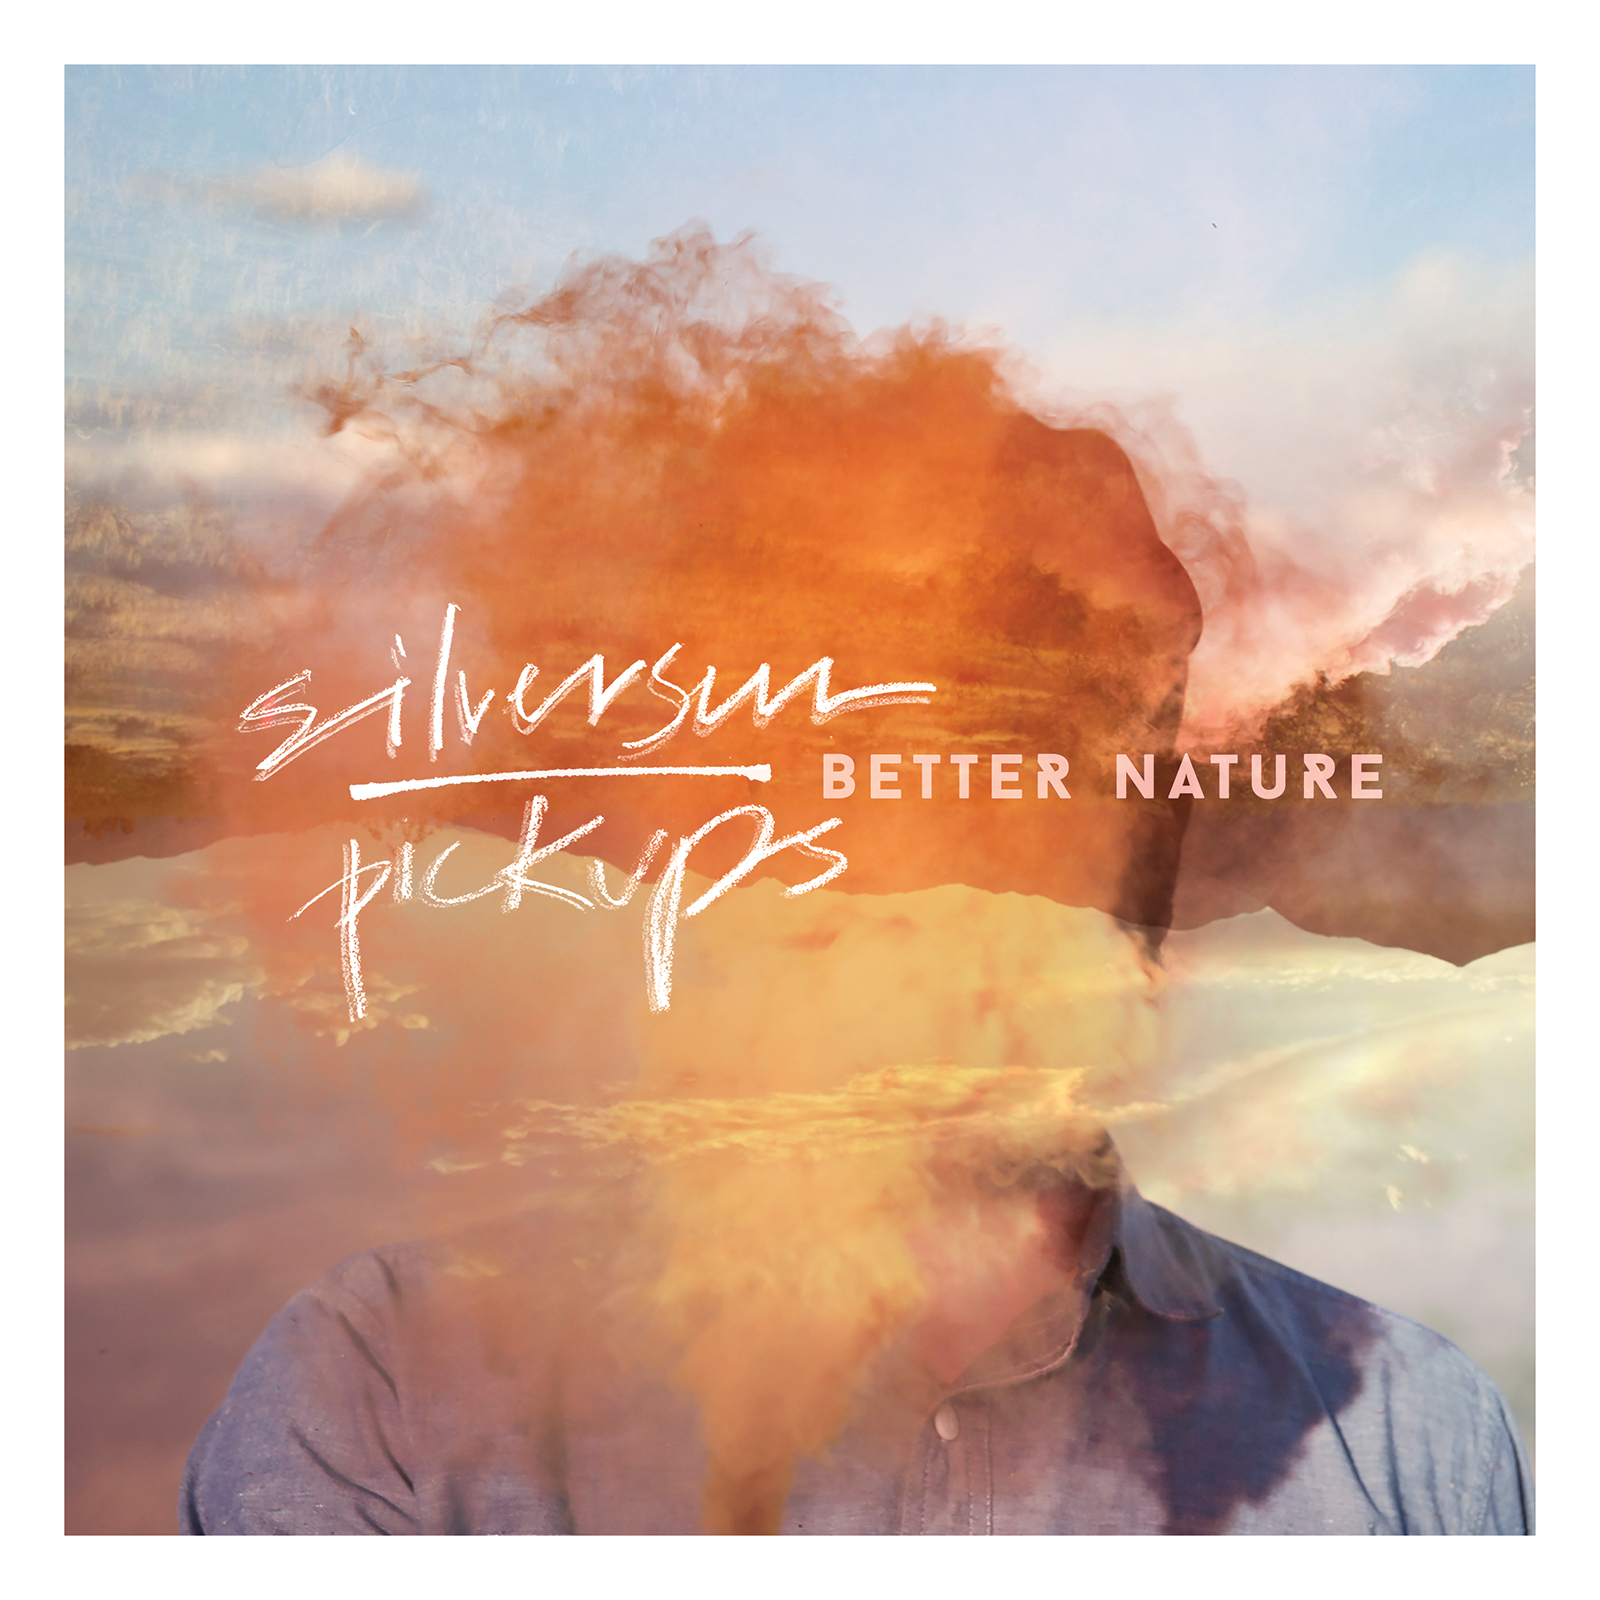 Silversun Pickups 'Better Nature' album artwork. Photo provided.